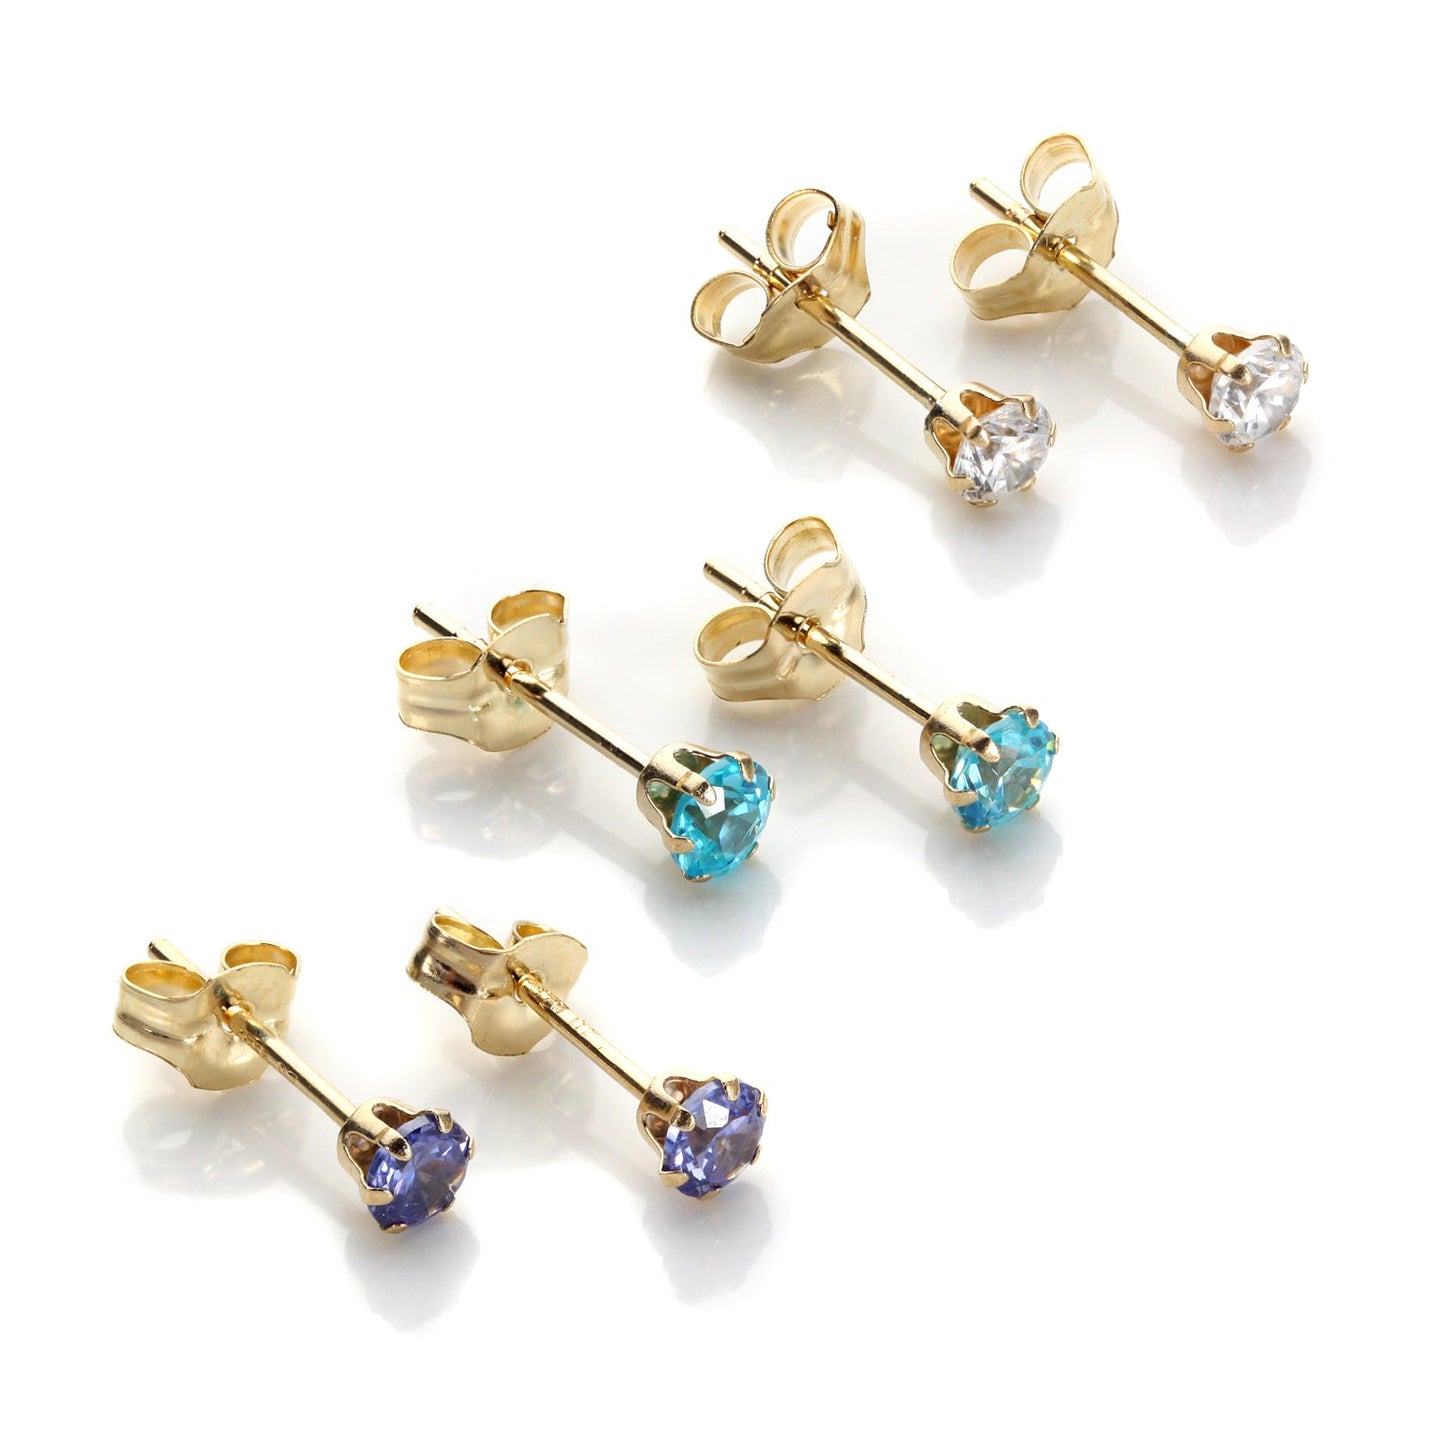 9ct Gold 3mm Crystal Stud Earrings Set